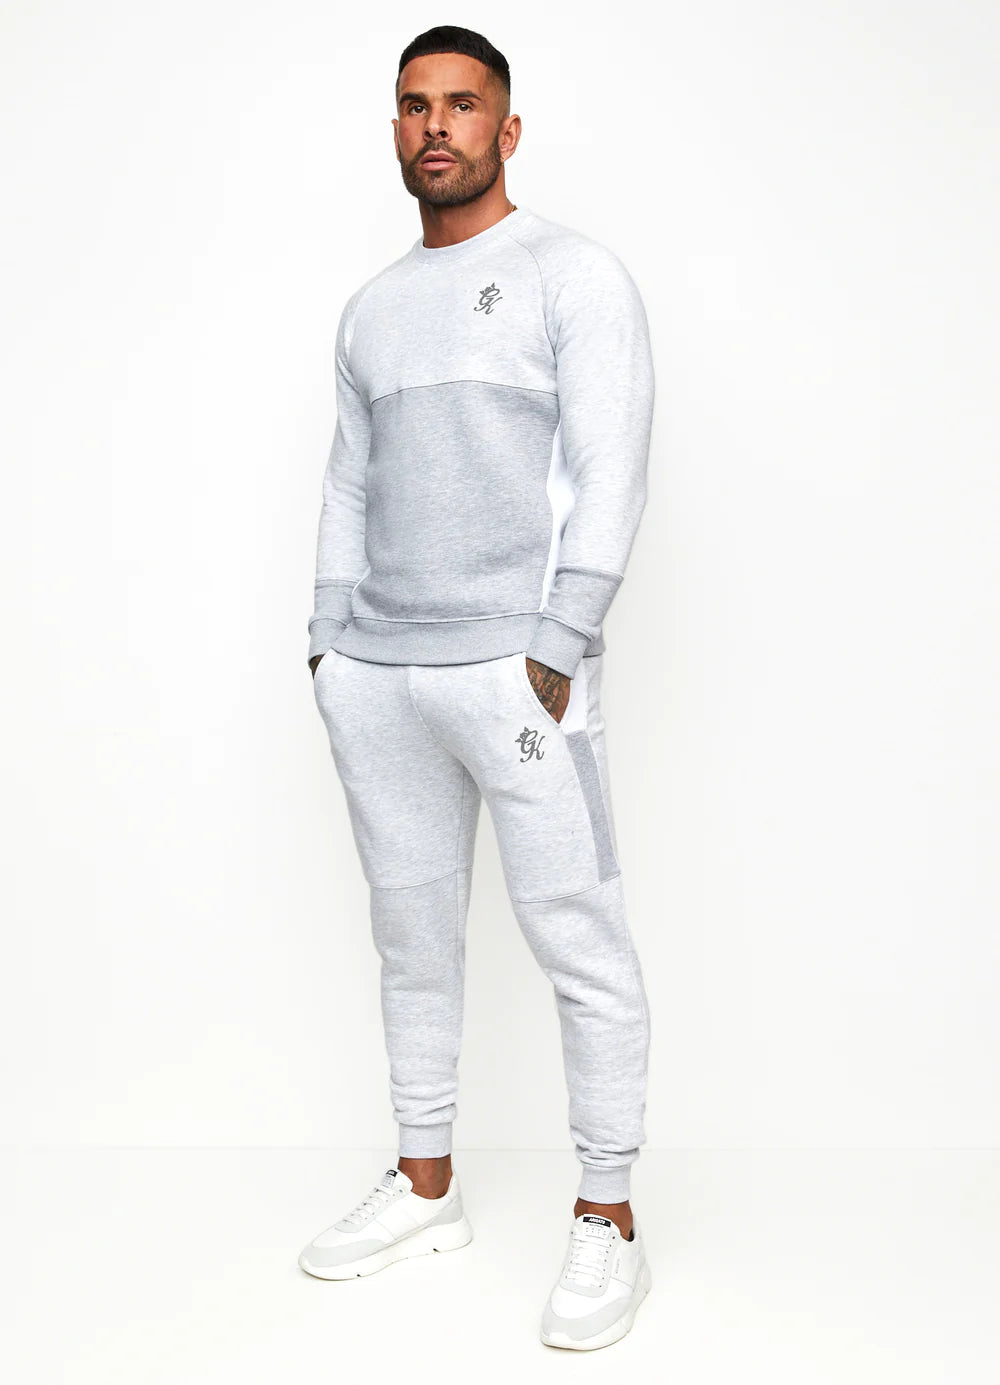 Gym King - Minefield Sweatshirt - Snow Marl/White/Light Grey Marl